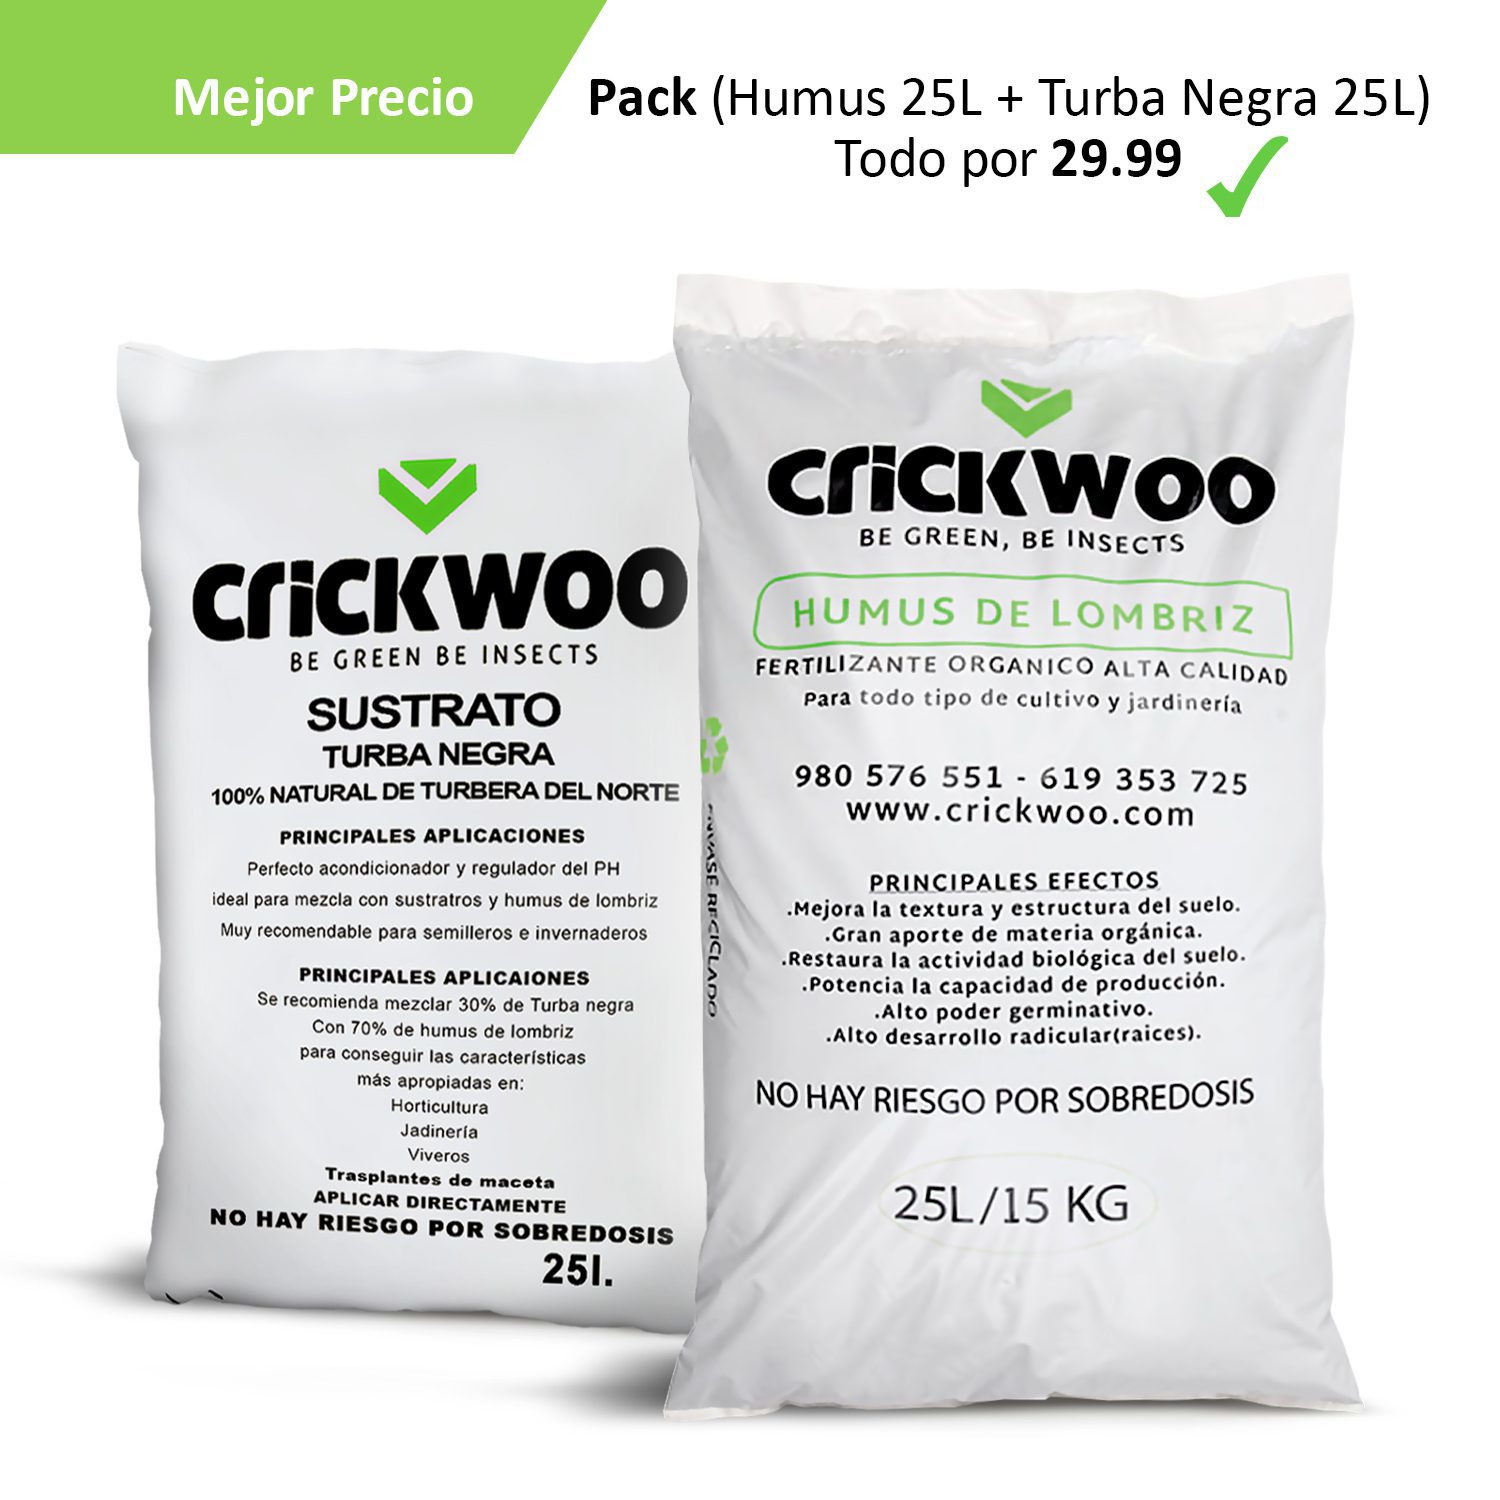 010 Pack of 25L humus and 25L peat bag with price